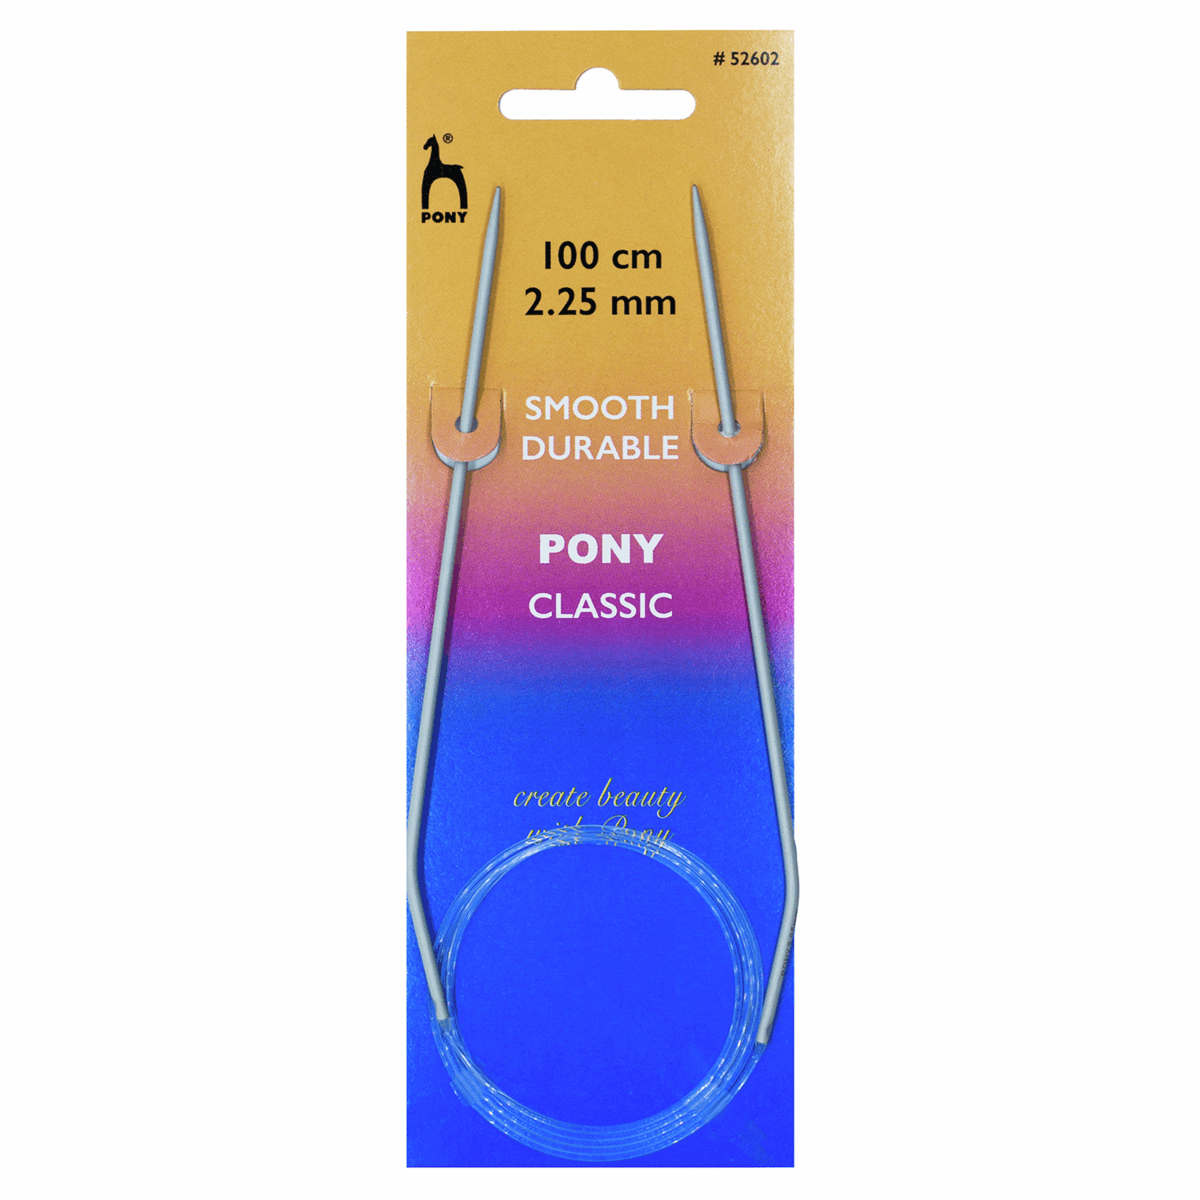 PONY Classic Circular Fixed Knitting Pins - 100cm x 2.25mm